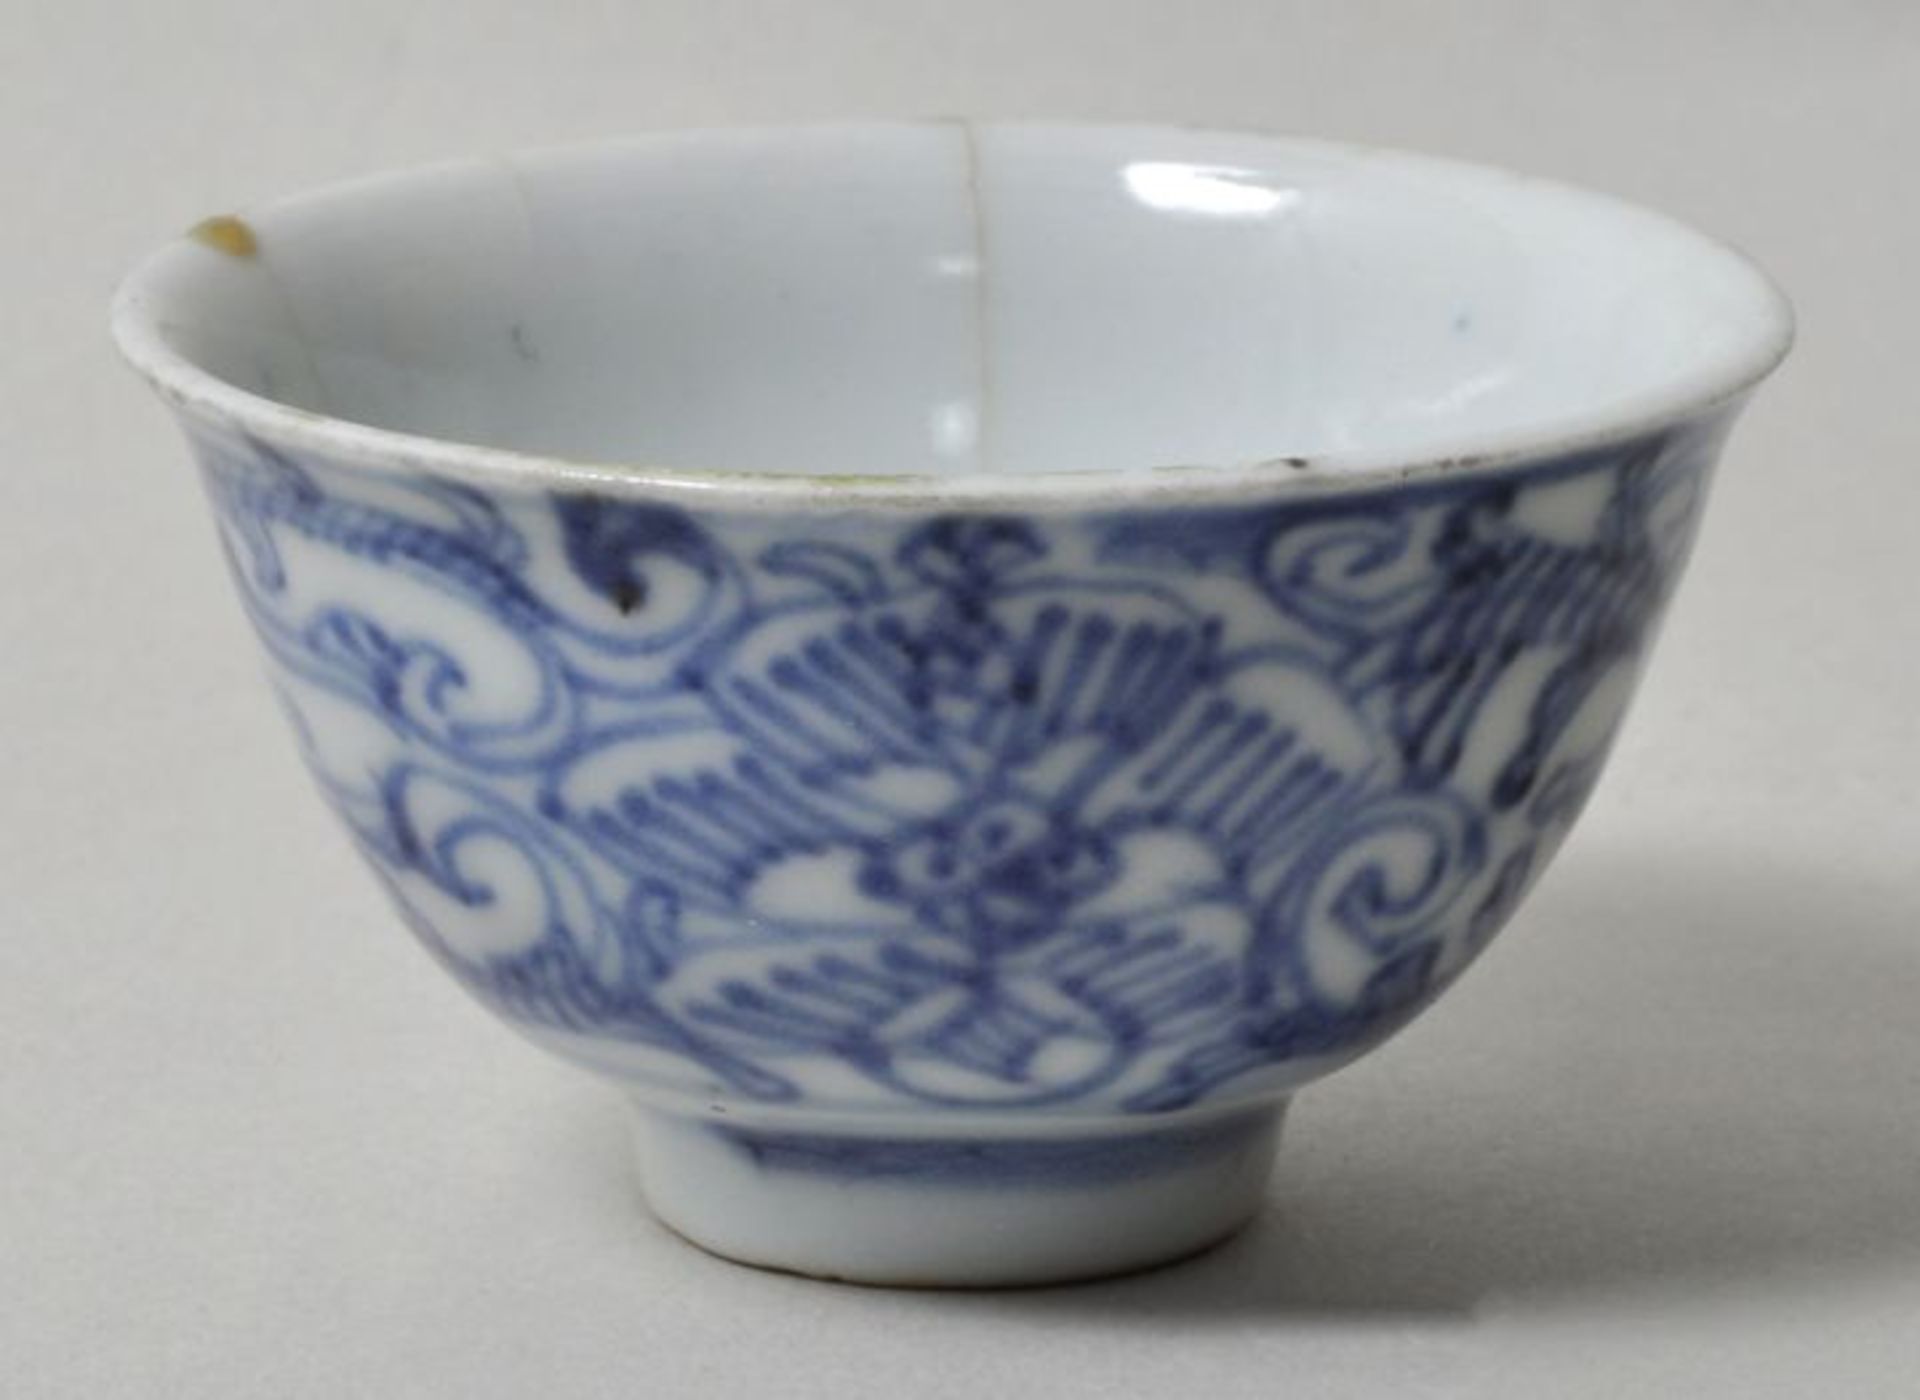 Kumme, China, Qing-Dynastie (1644-1911)Porzellan, blau-weiß-Dekor, Haarrisse, Randchips.